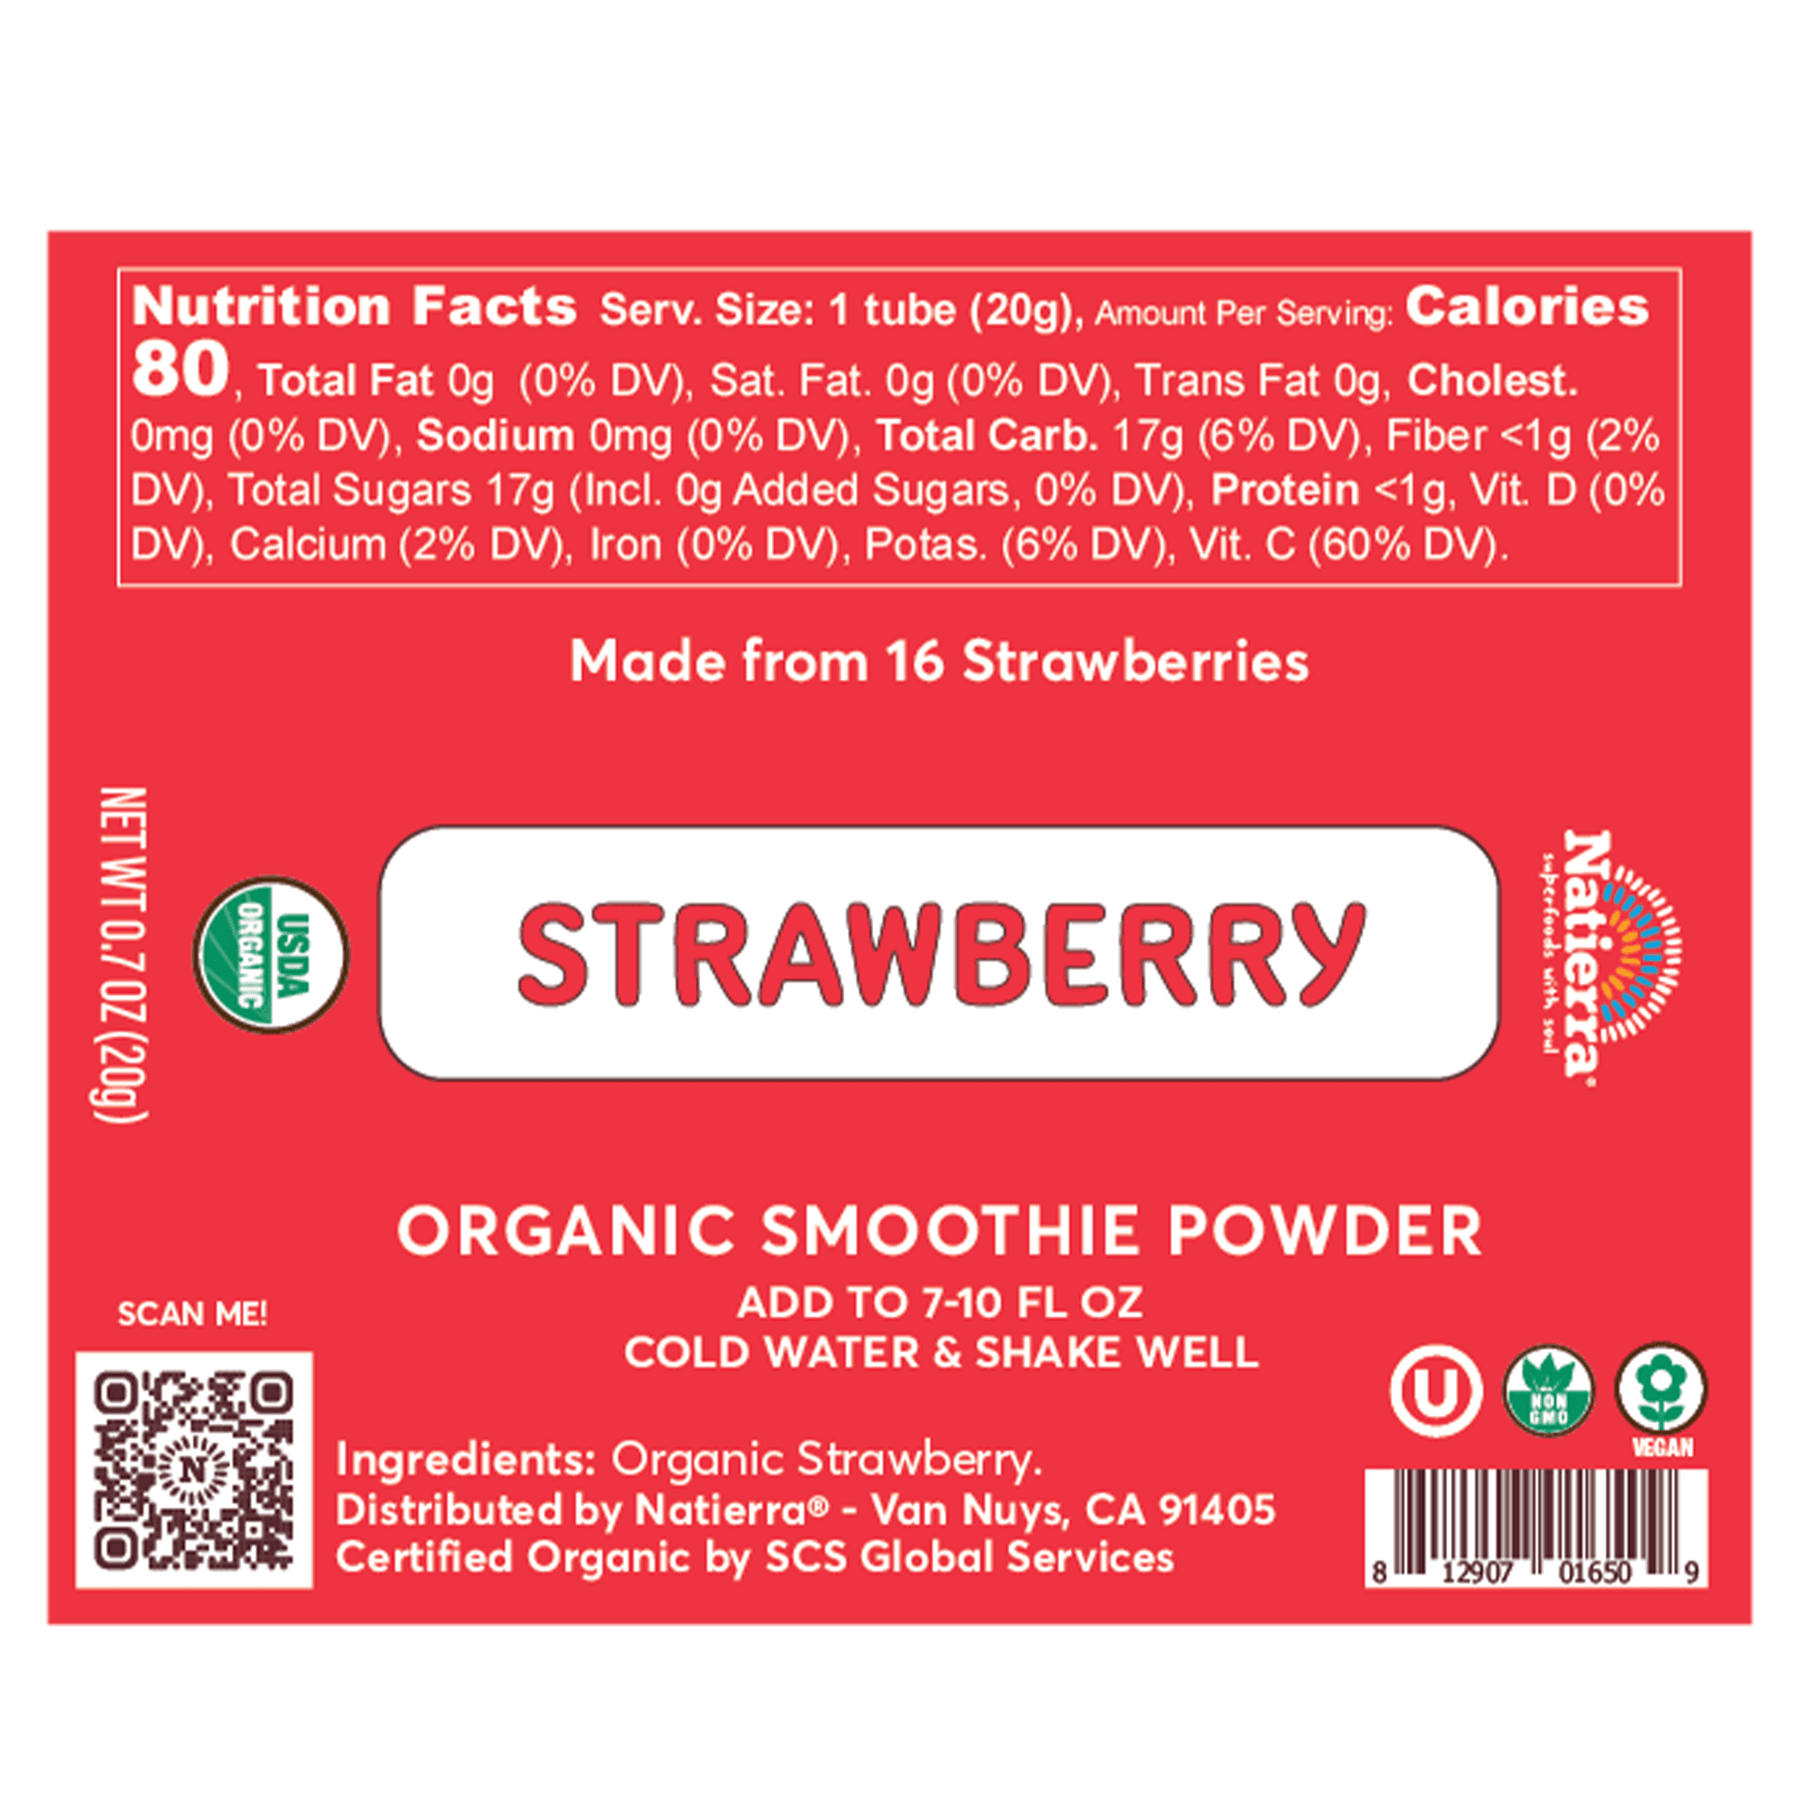 Natierra Strawberry Smoothie Powder nutrition facts